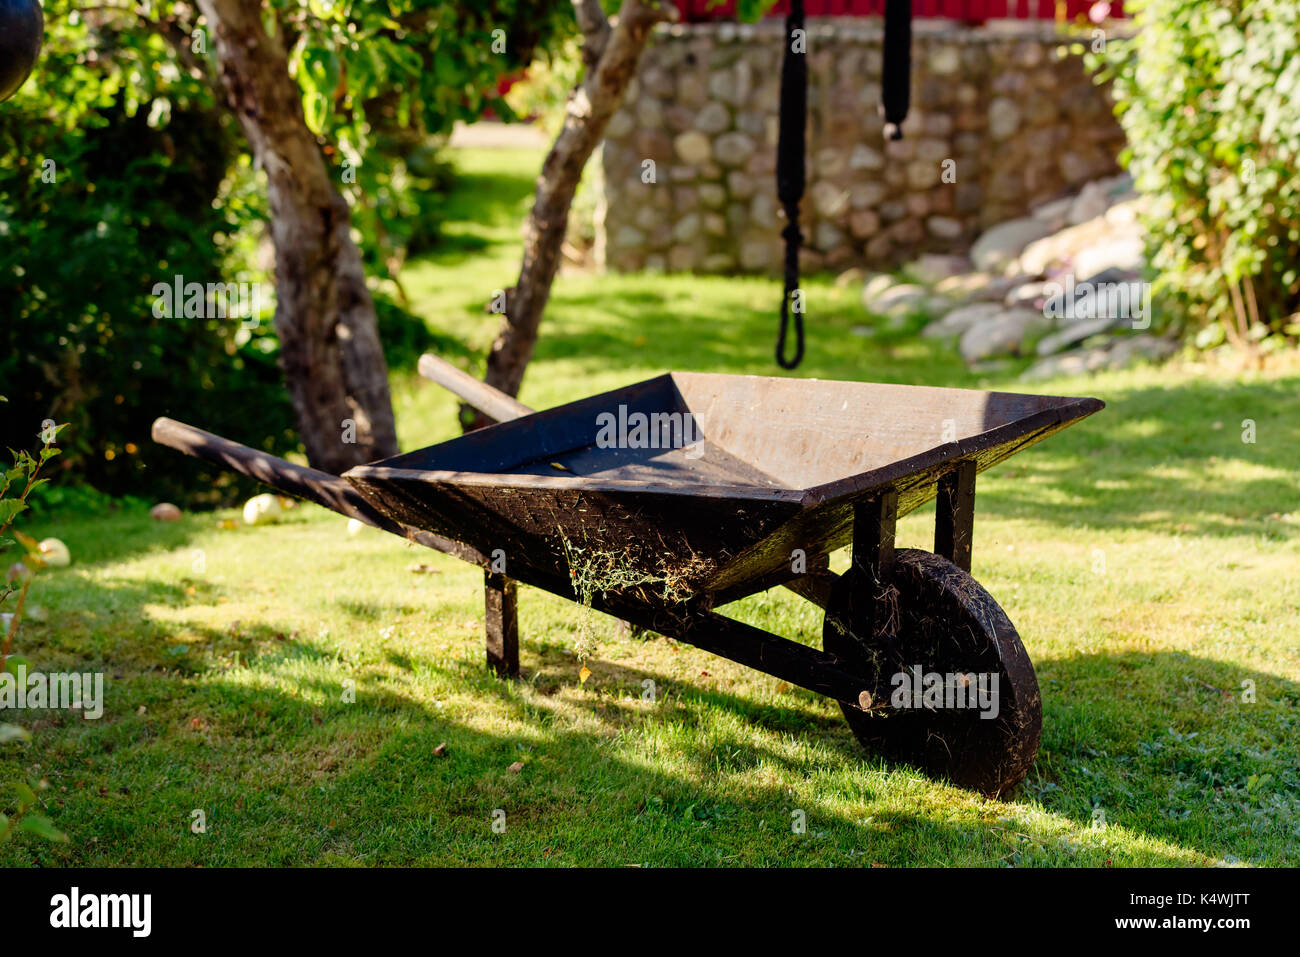 Old wooden wheelbarrow standing empty on lawn. Stock Photo